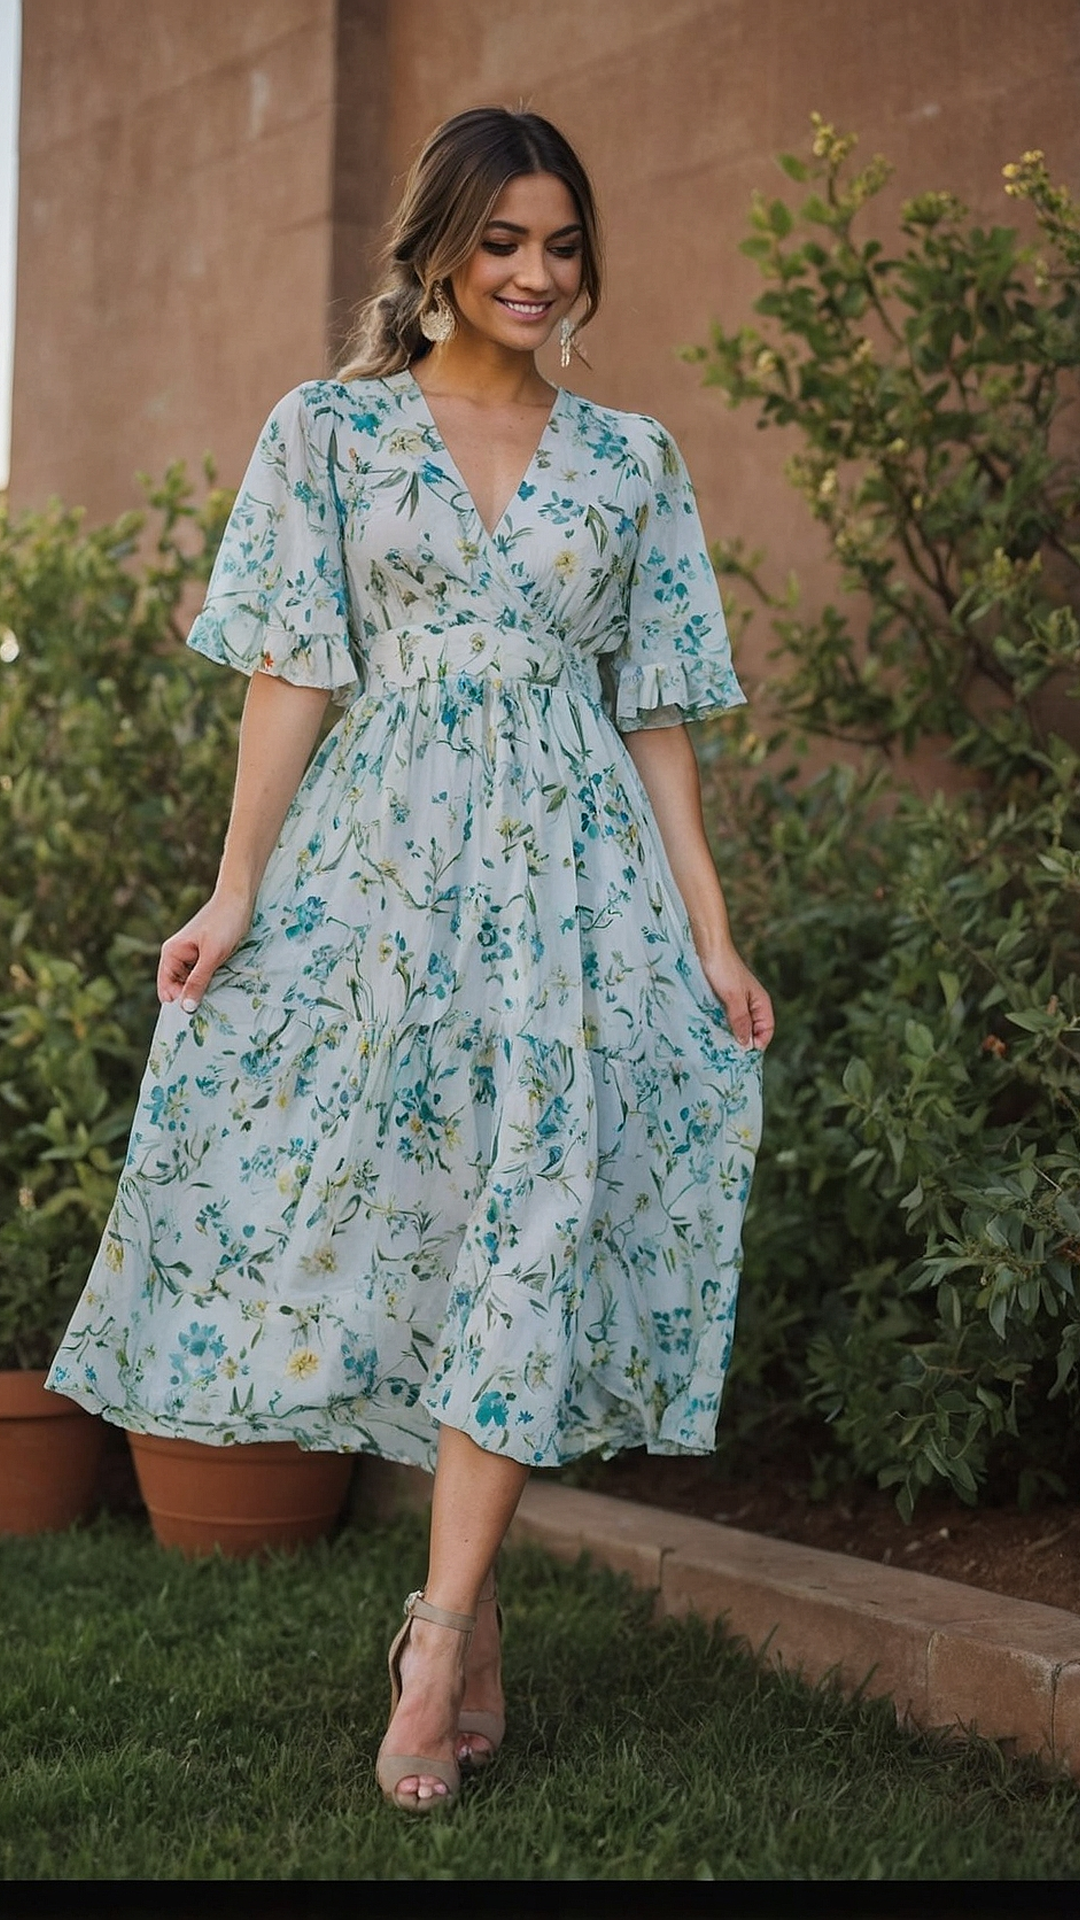 Floral Flounce: Maxi Dress Ideas to Love